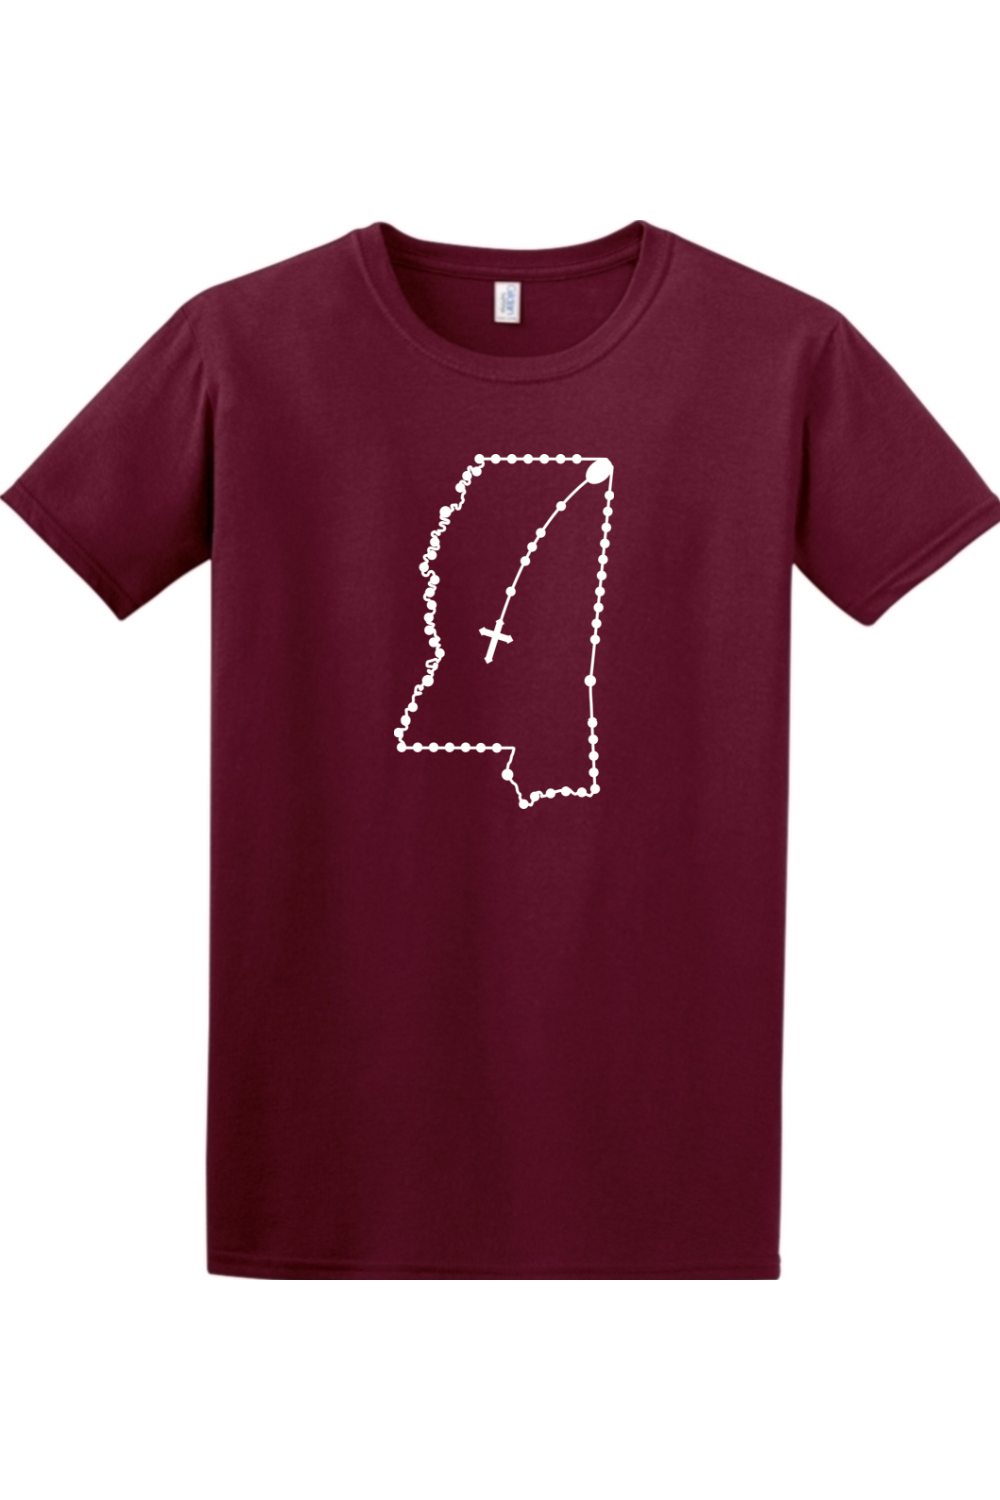 Mississippi Rosary Adult T-shirt